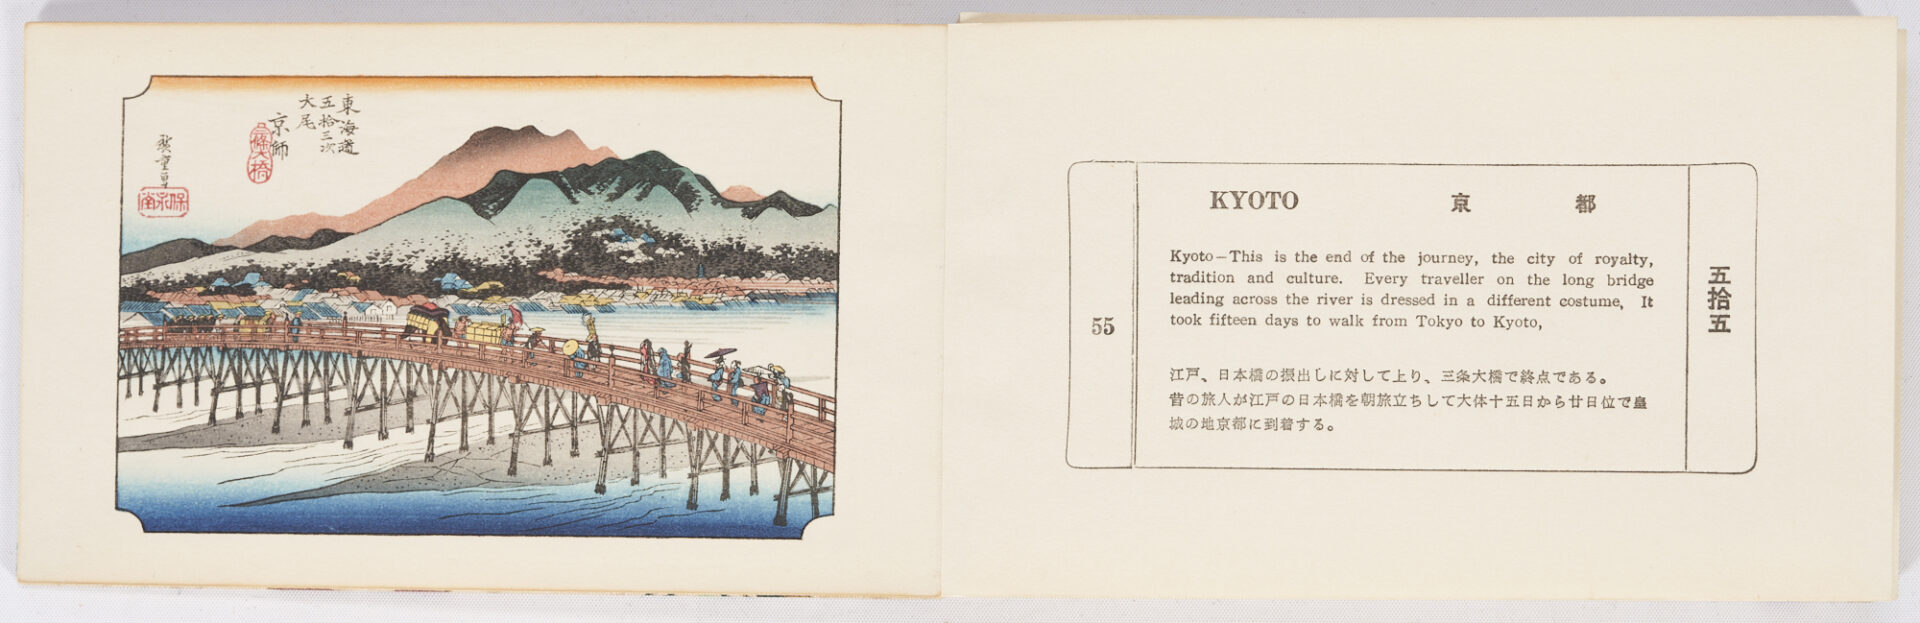 Lot 235: 2 Japanese Small Painted Screens & 1 Hiroshige Miniature Set, Total 3